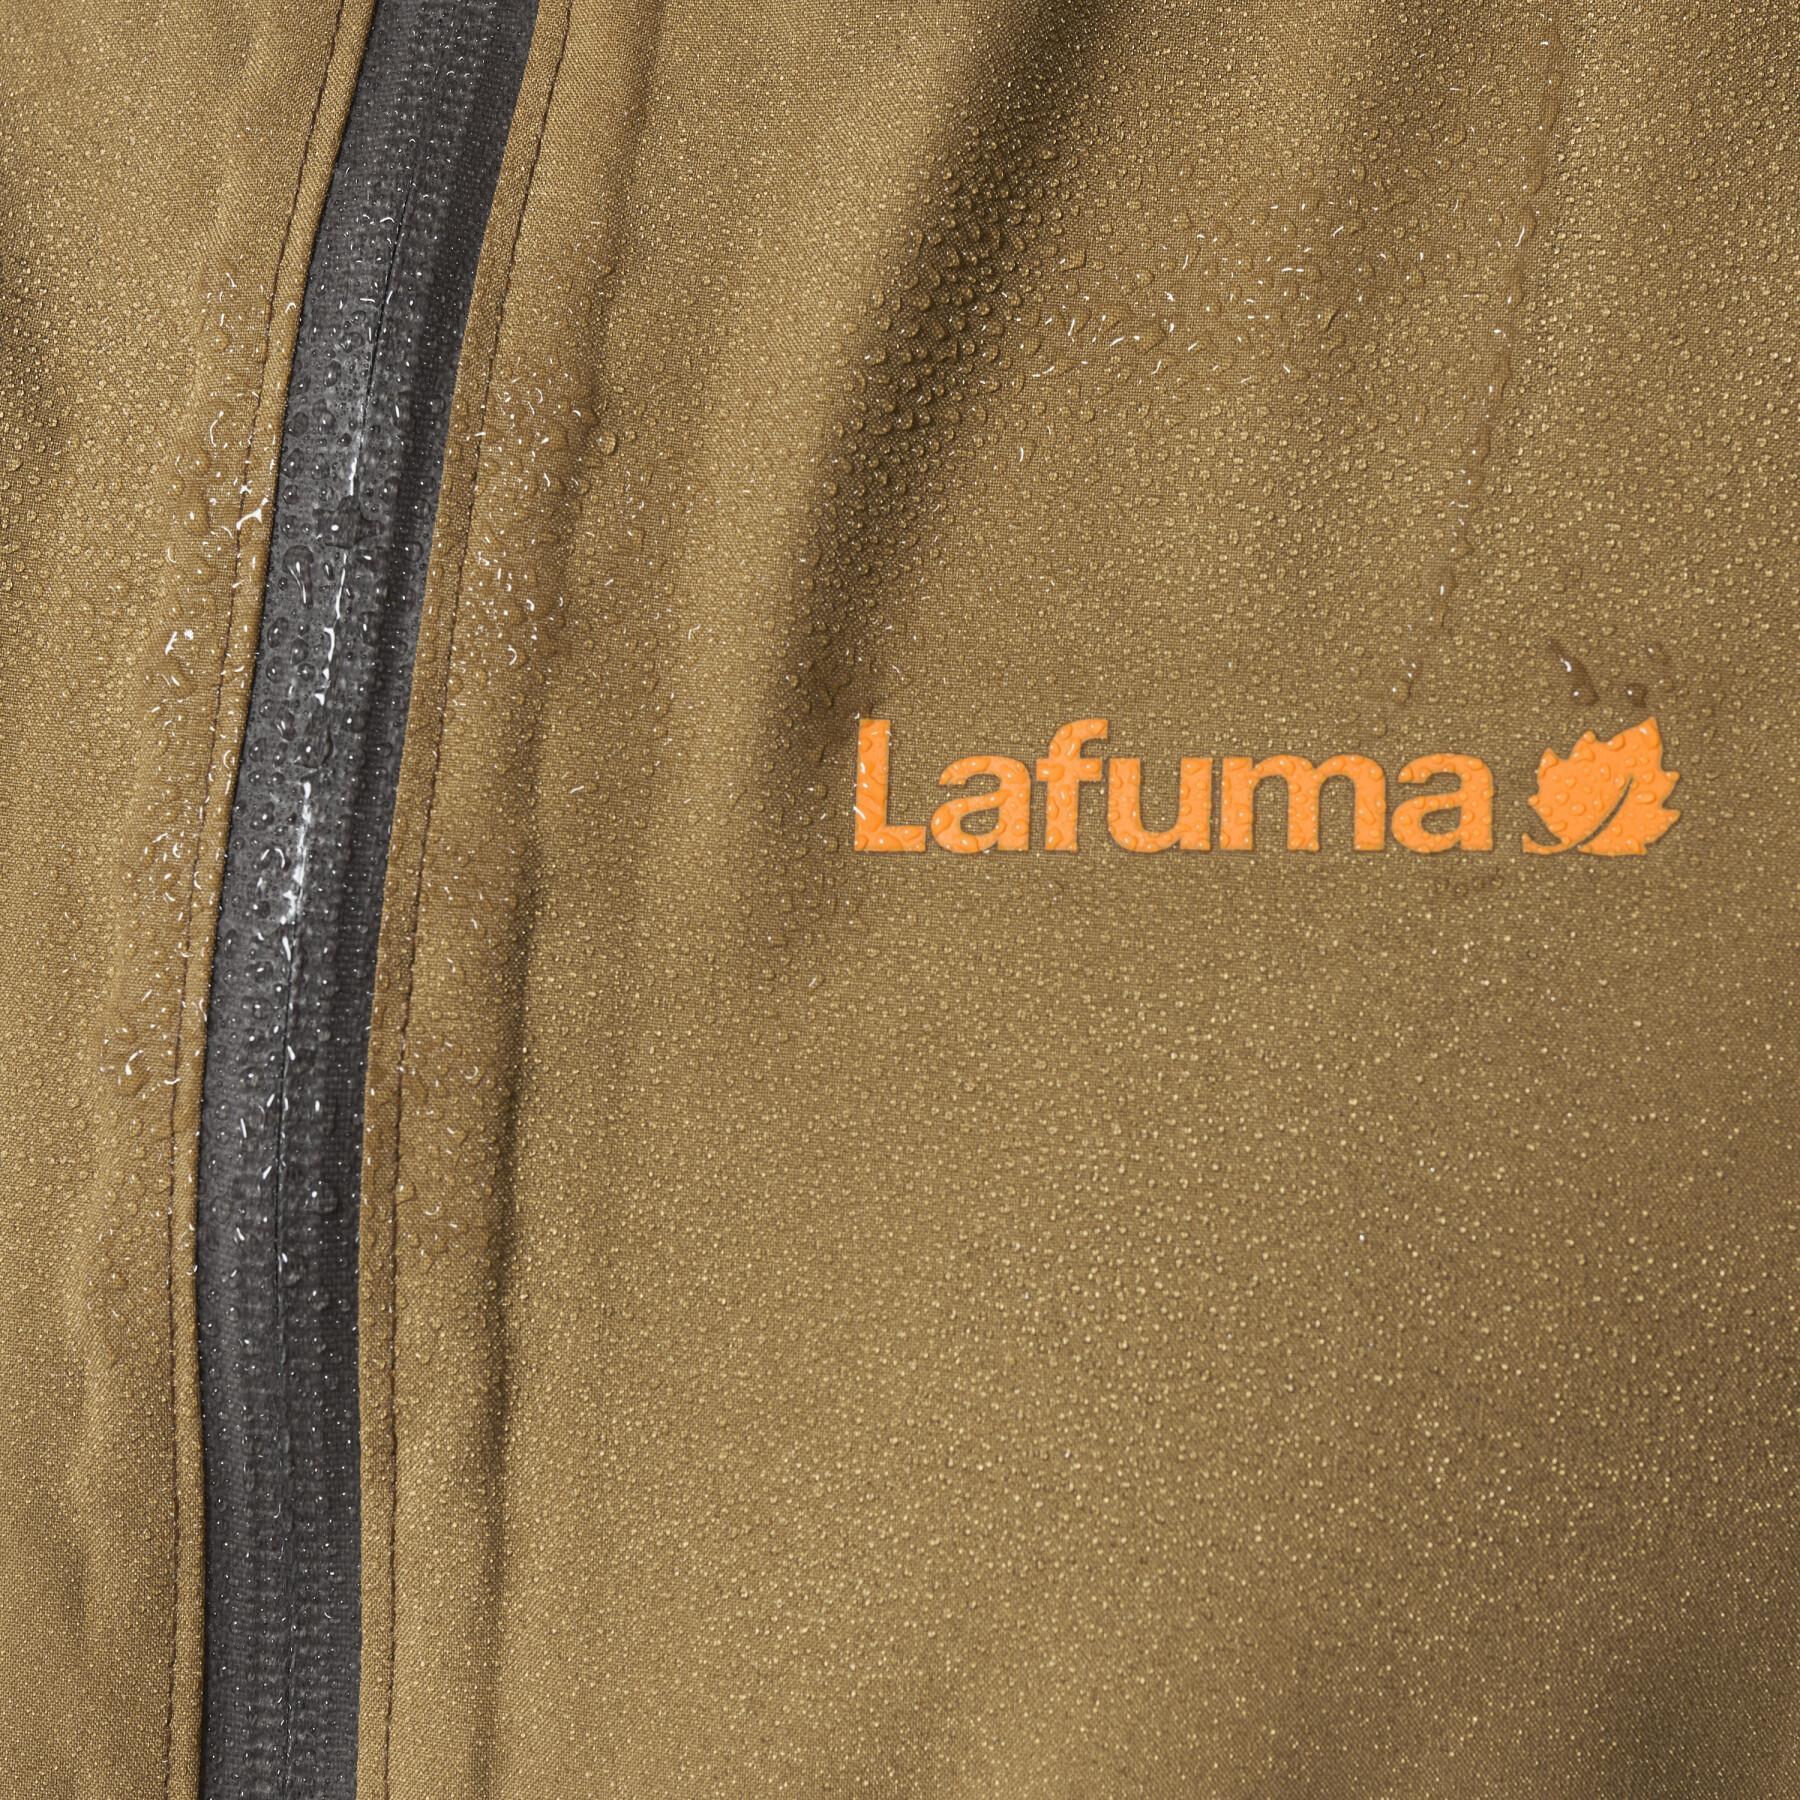 Waterproof jacket Lafuma Shift Gore-Tex